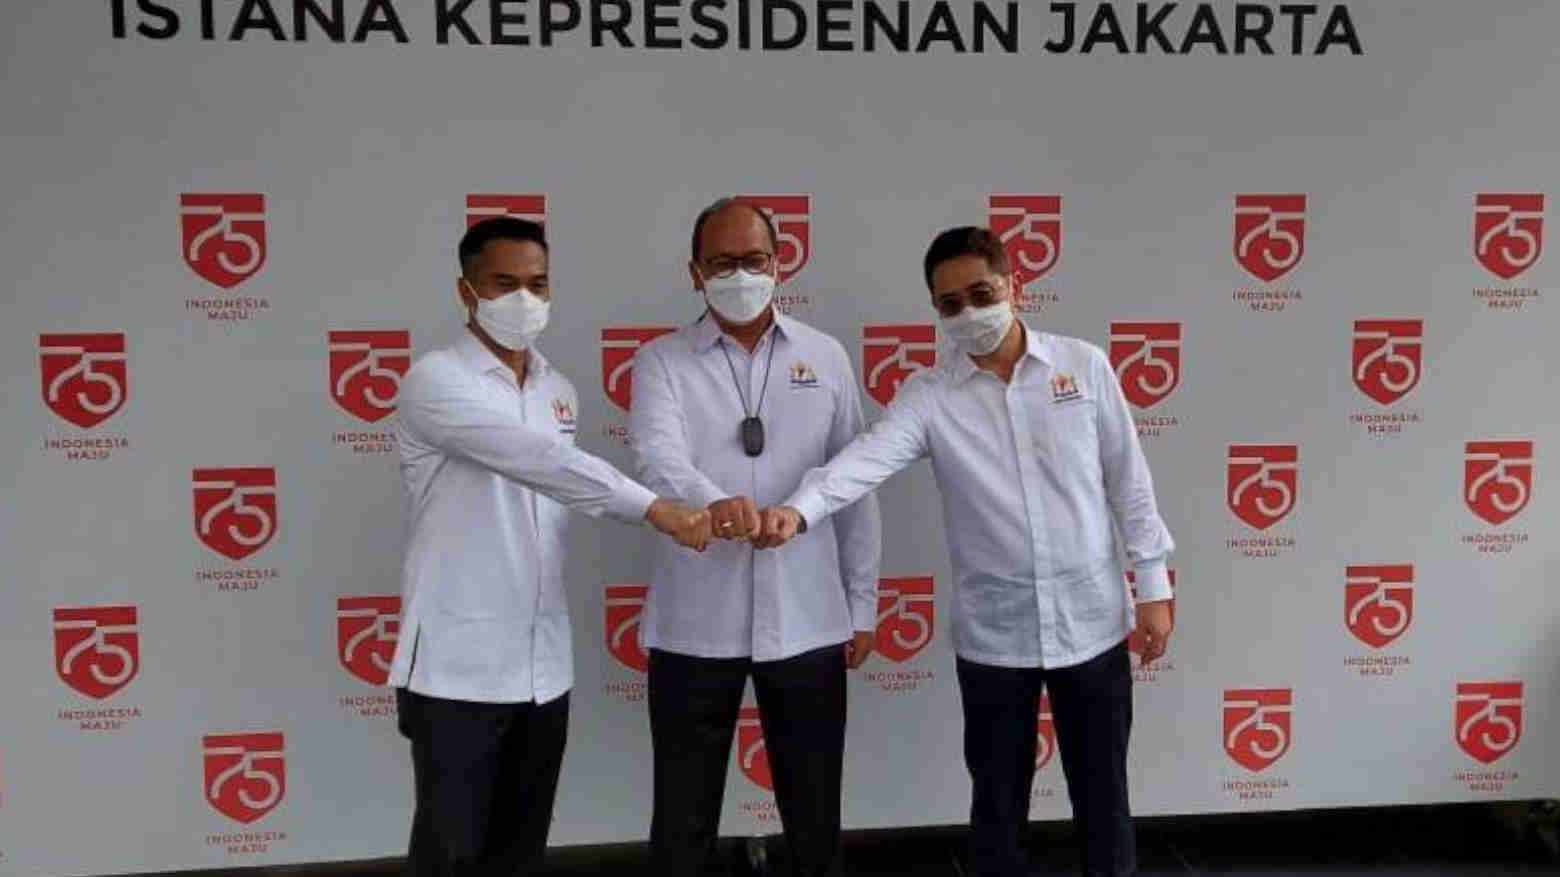 Jelang Munas, Dua Calon Ketua Kadin Sepakat Berbagi Jatah di Depan Jokowi